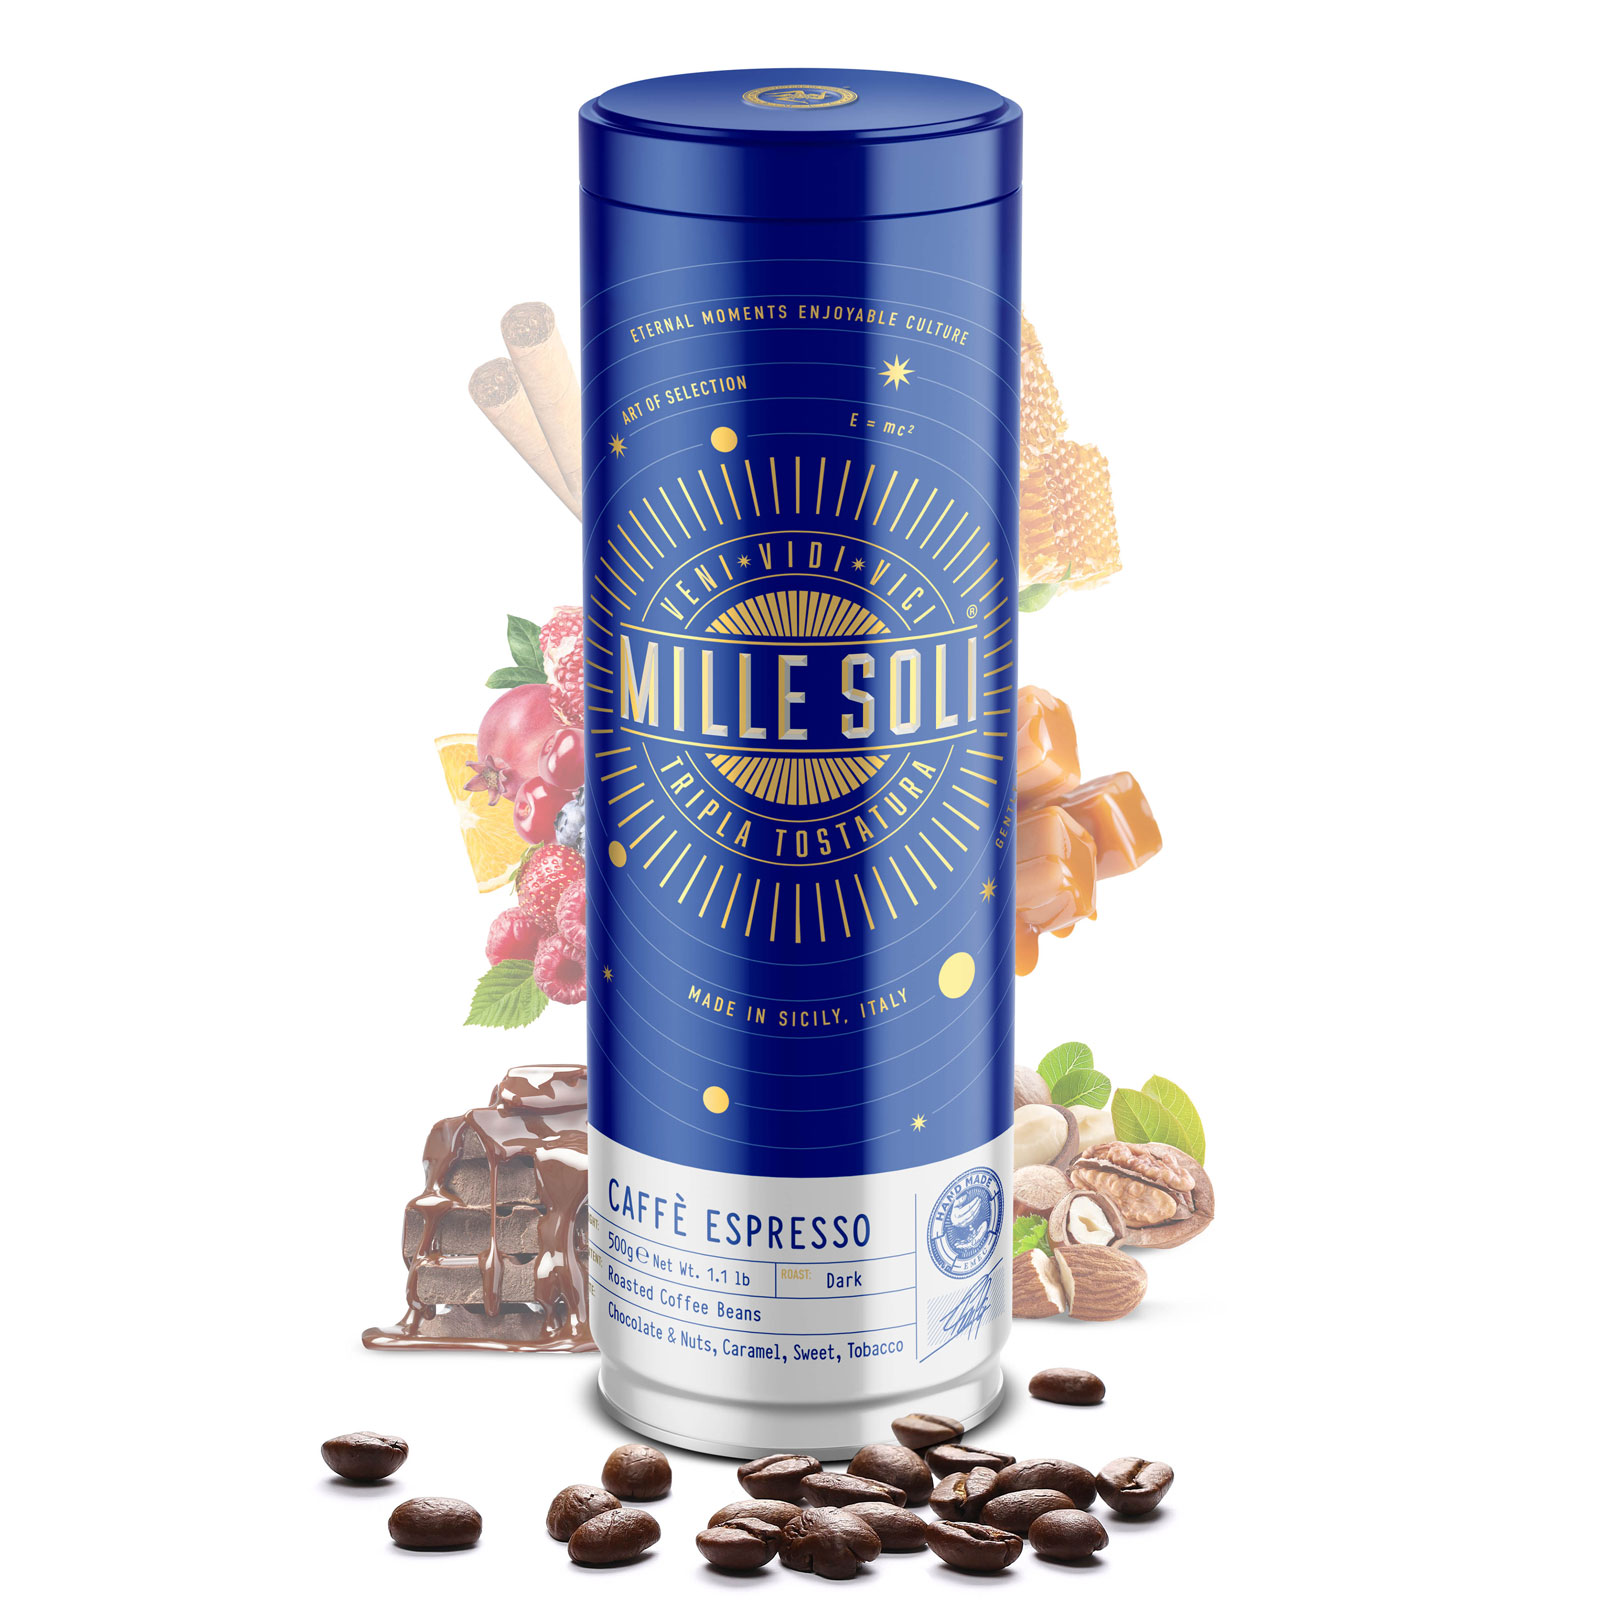 MILLE SOLI - Caffè Espresso - 500g - Beans